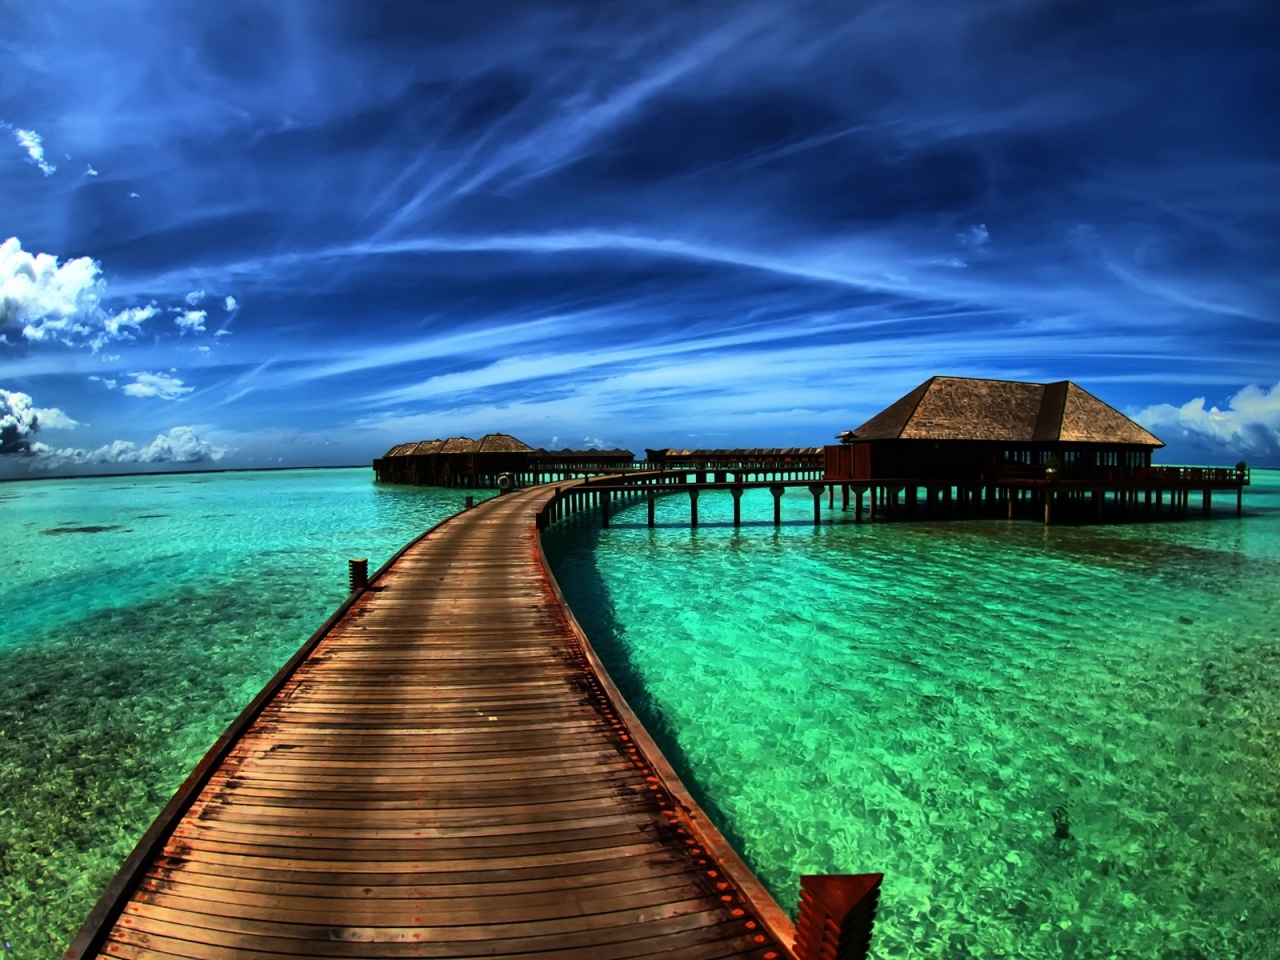 Amazing Sea Resort for 1280 x 960 resolution